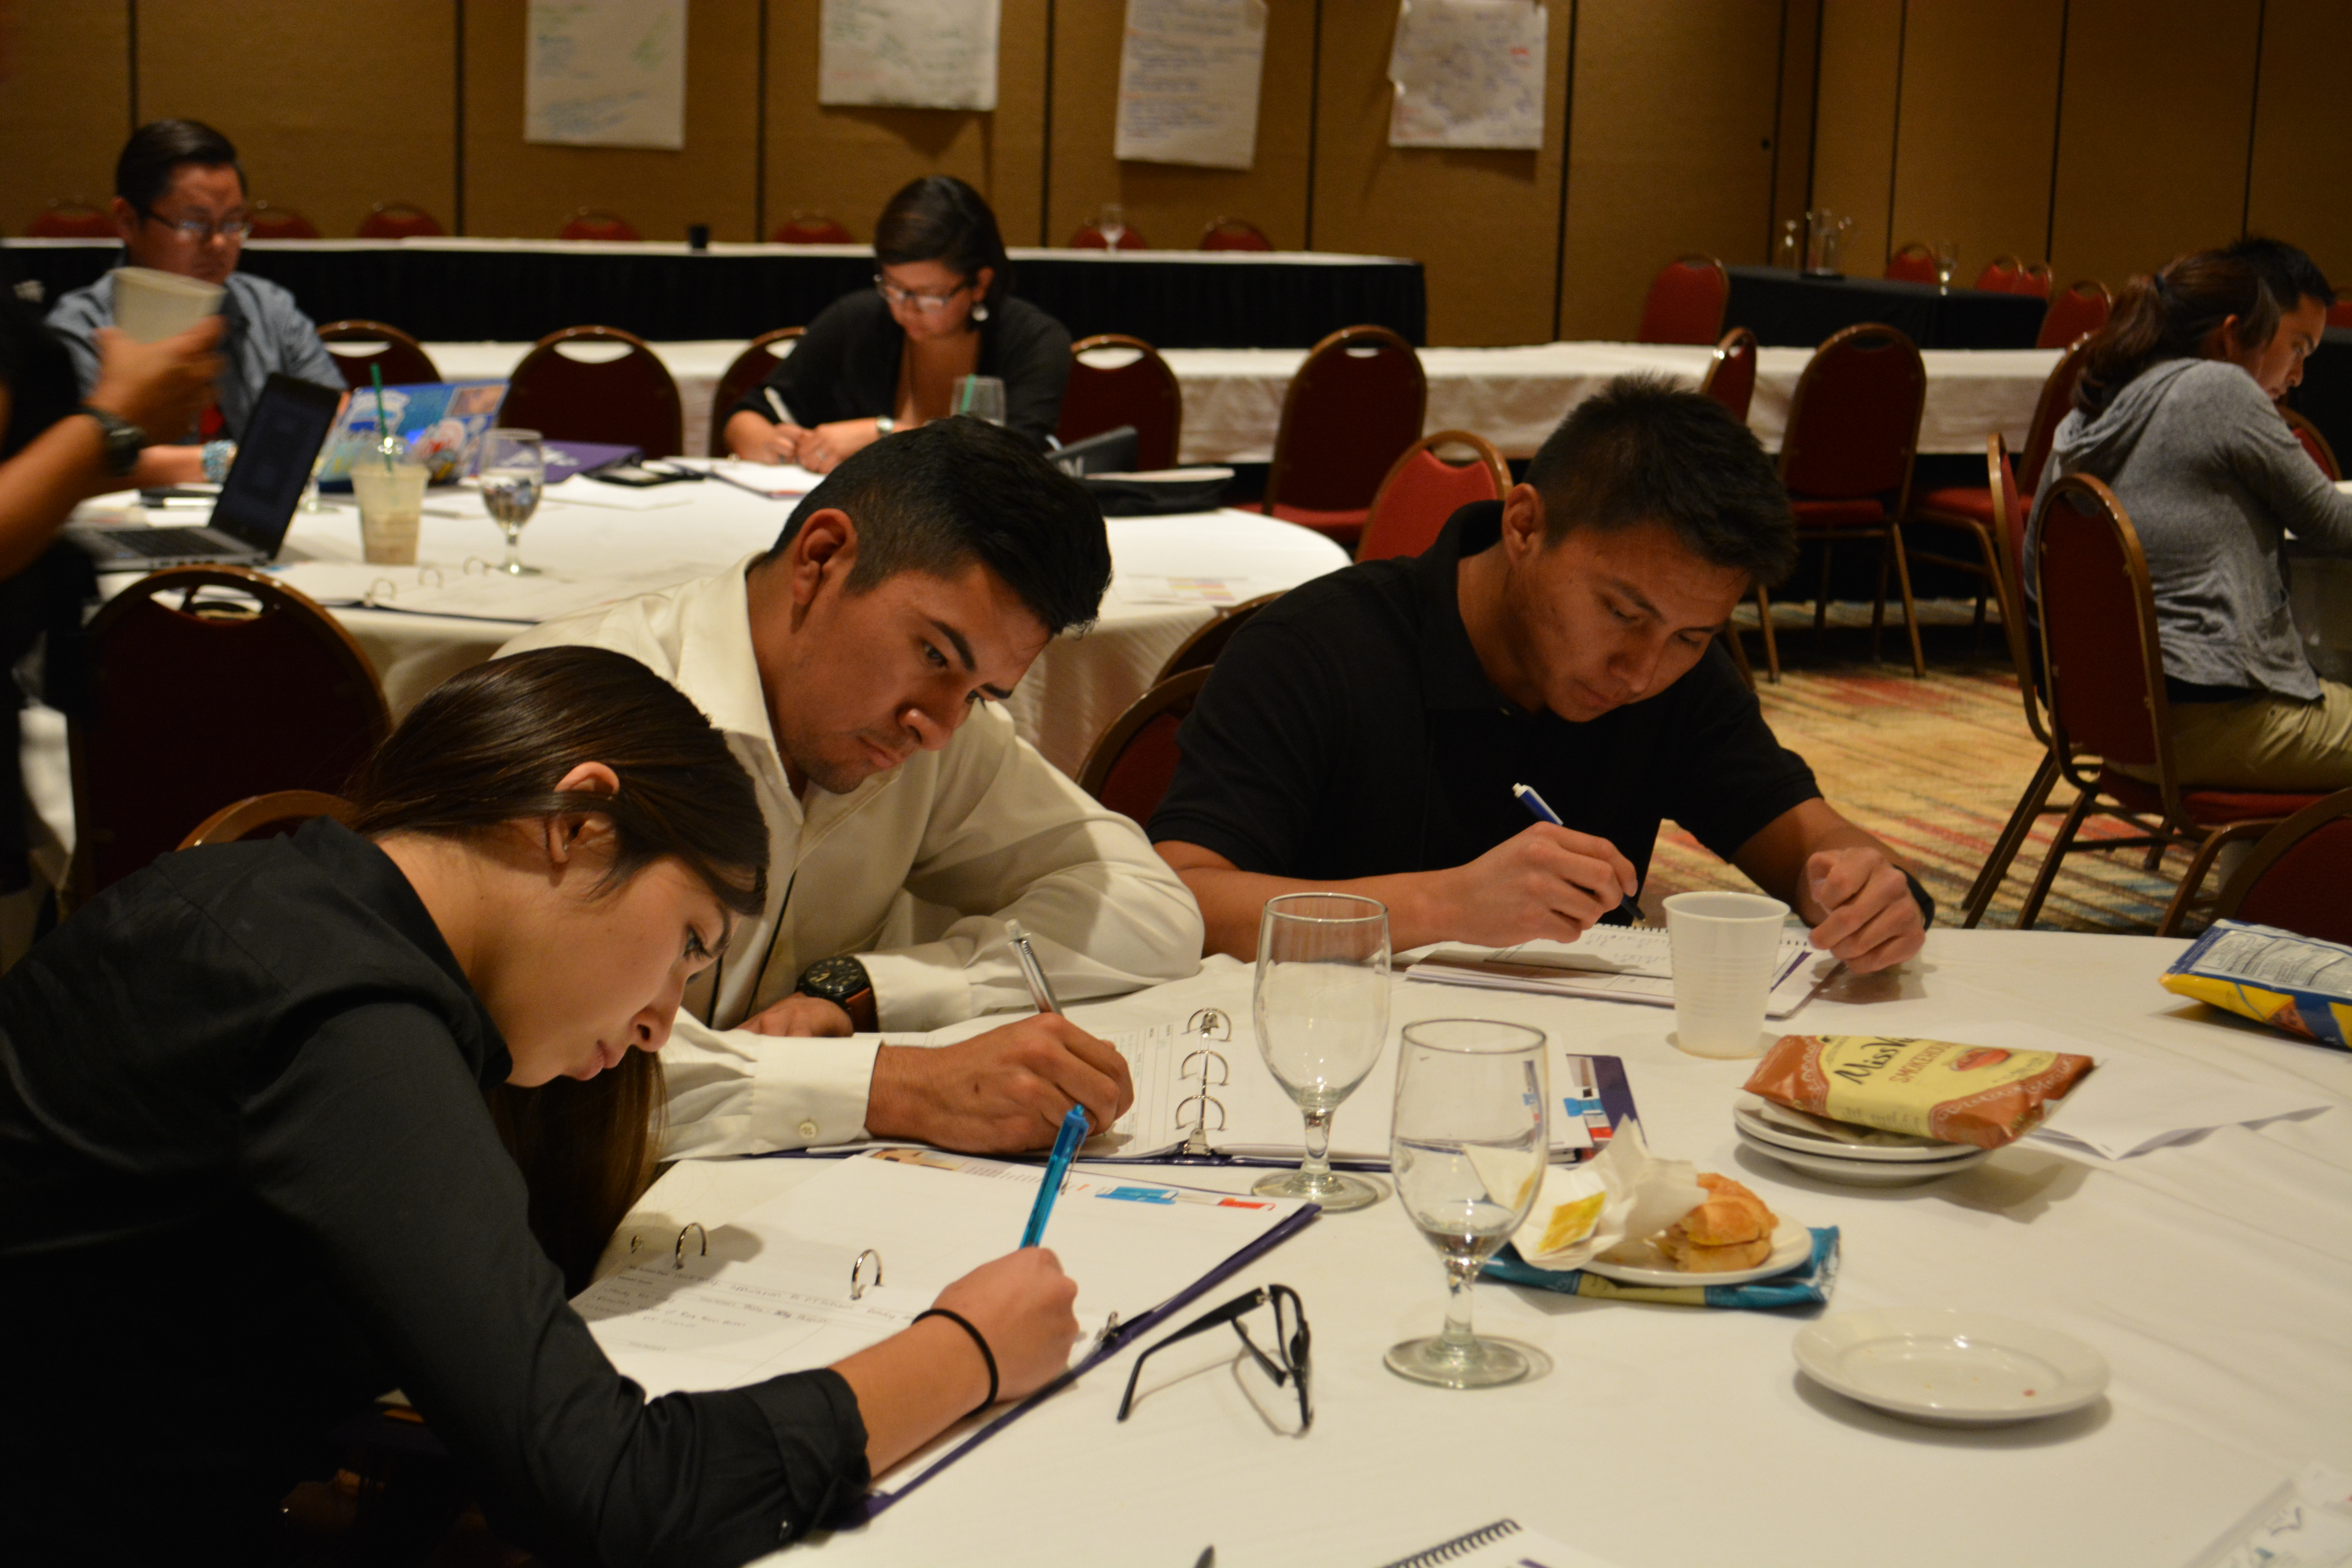 Participants writing at tables.